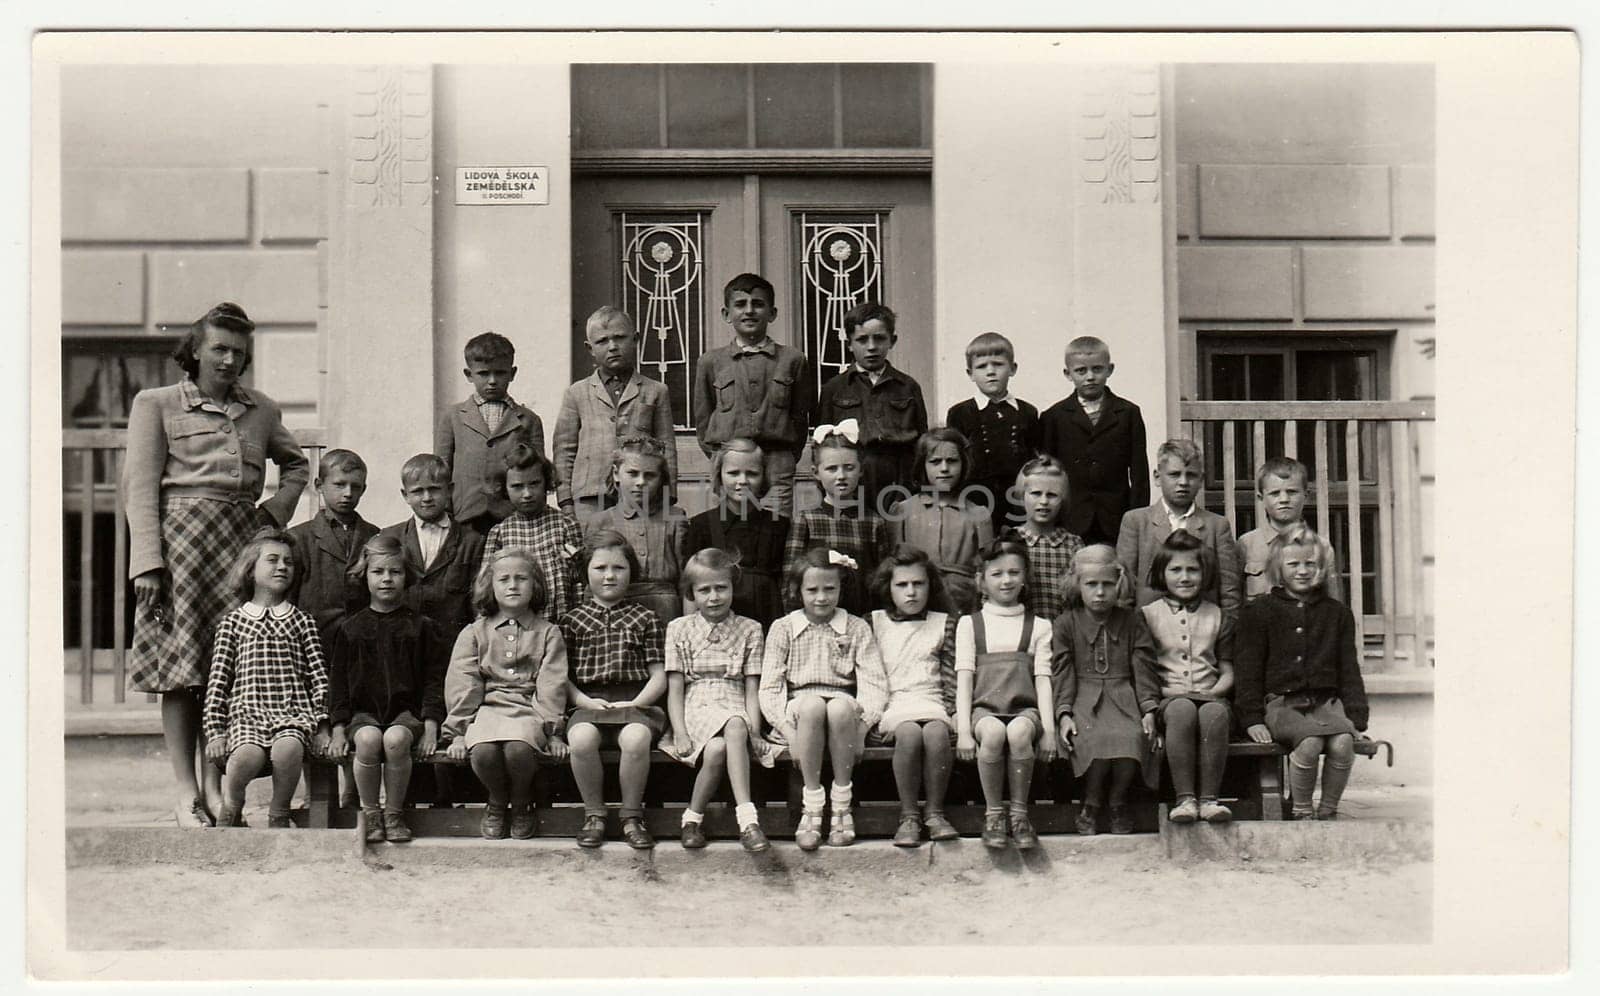 THE CZECHOSLOVAK SOCIALIST REPUBLIC - CIRCA 1948: Vintage photo shows pupils (schoolmates) and their female teacher.